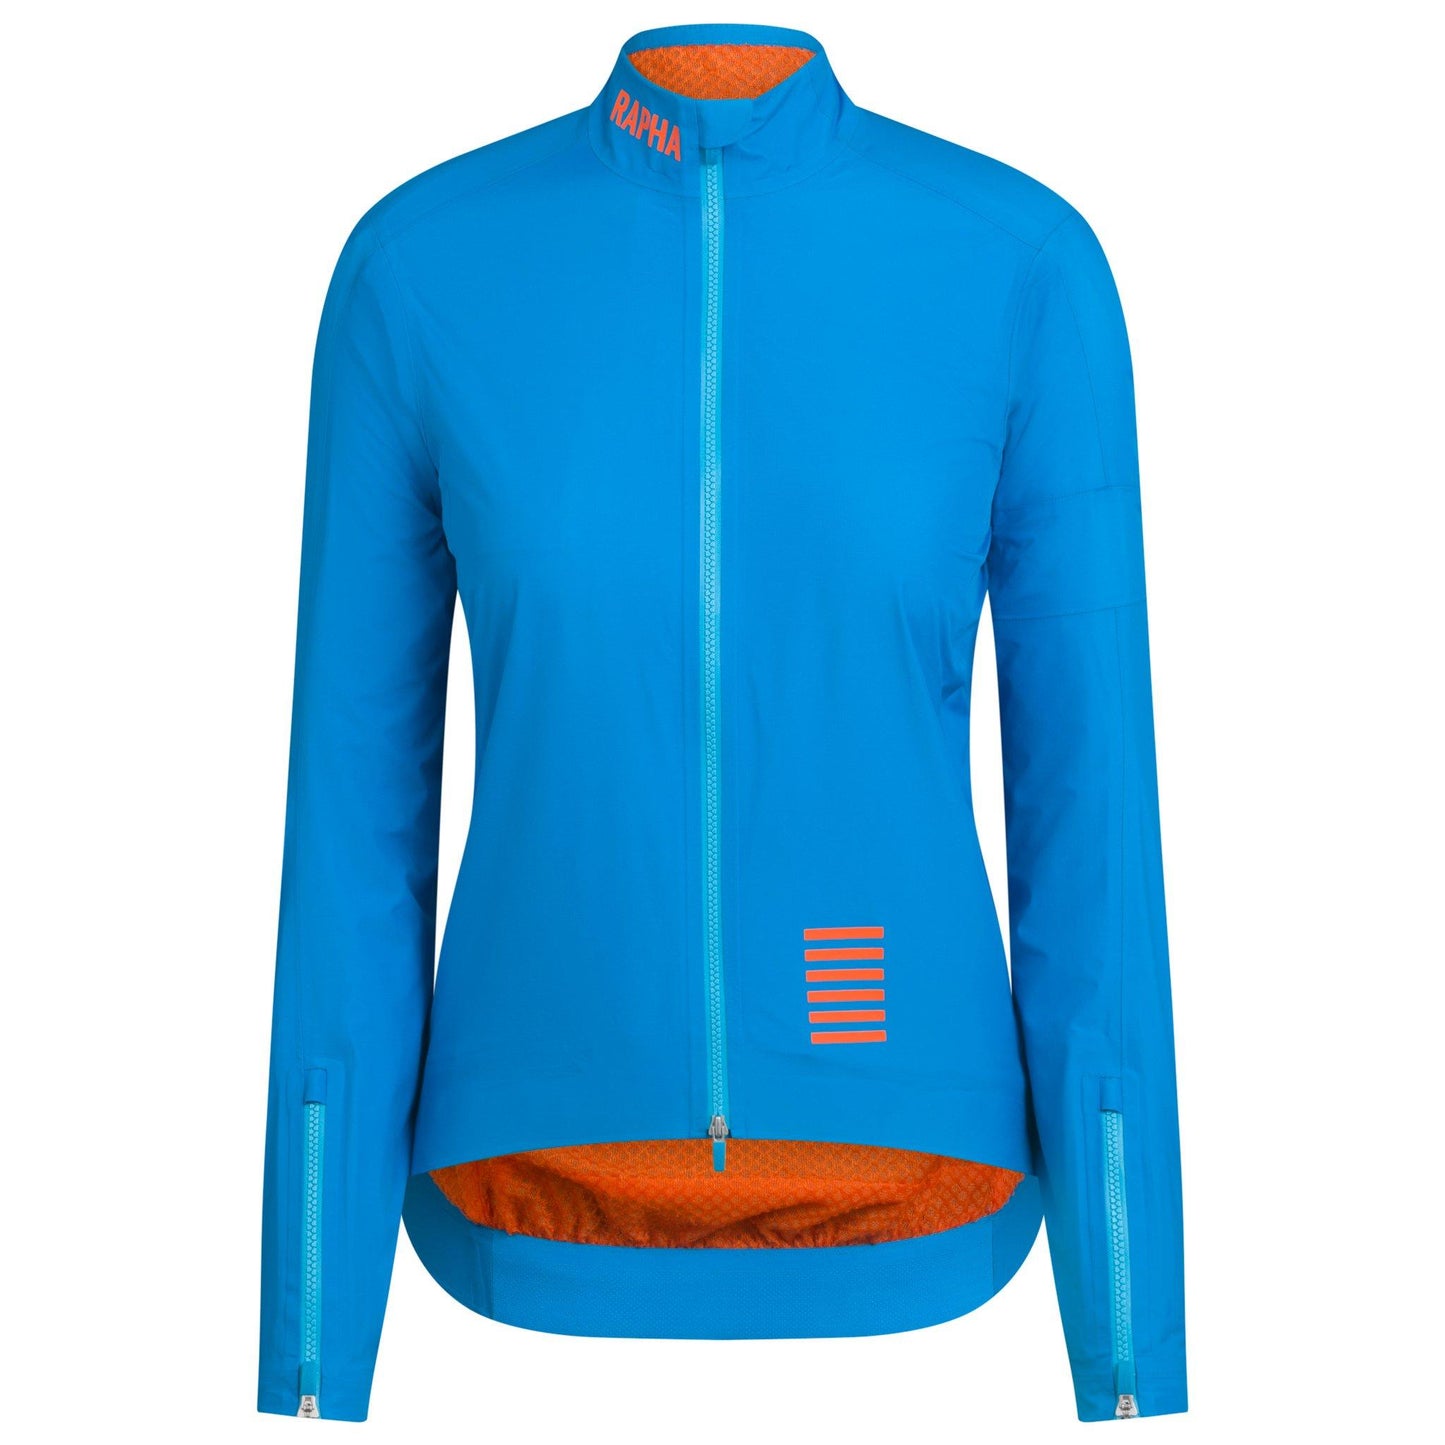 Rapha Women's Pro Team Gore-Tex Insulated Jacket, Blue/Orange